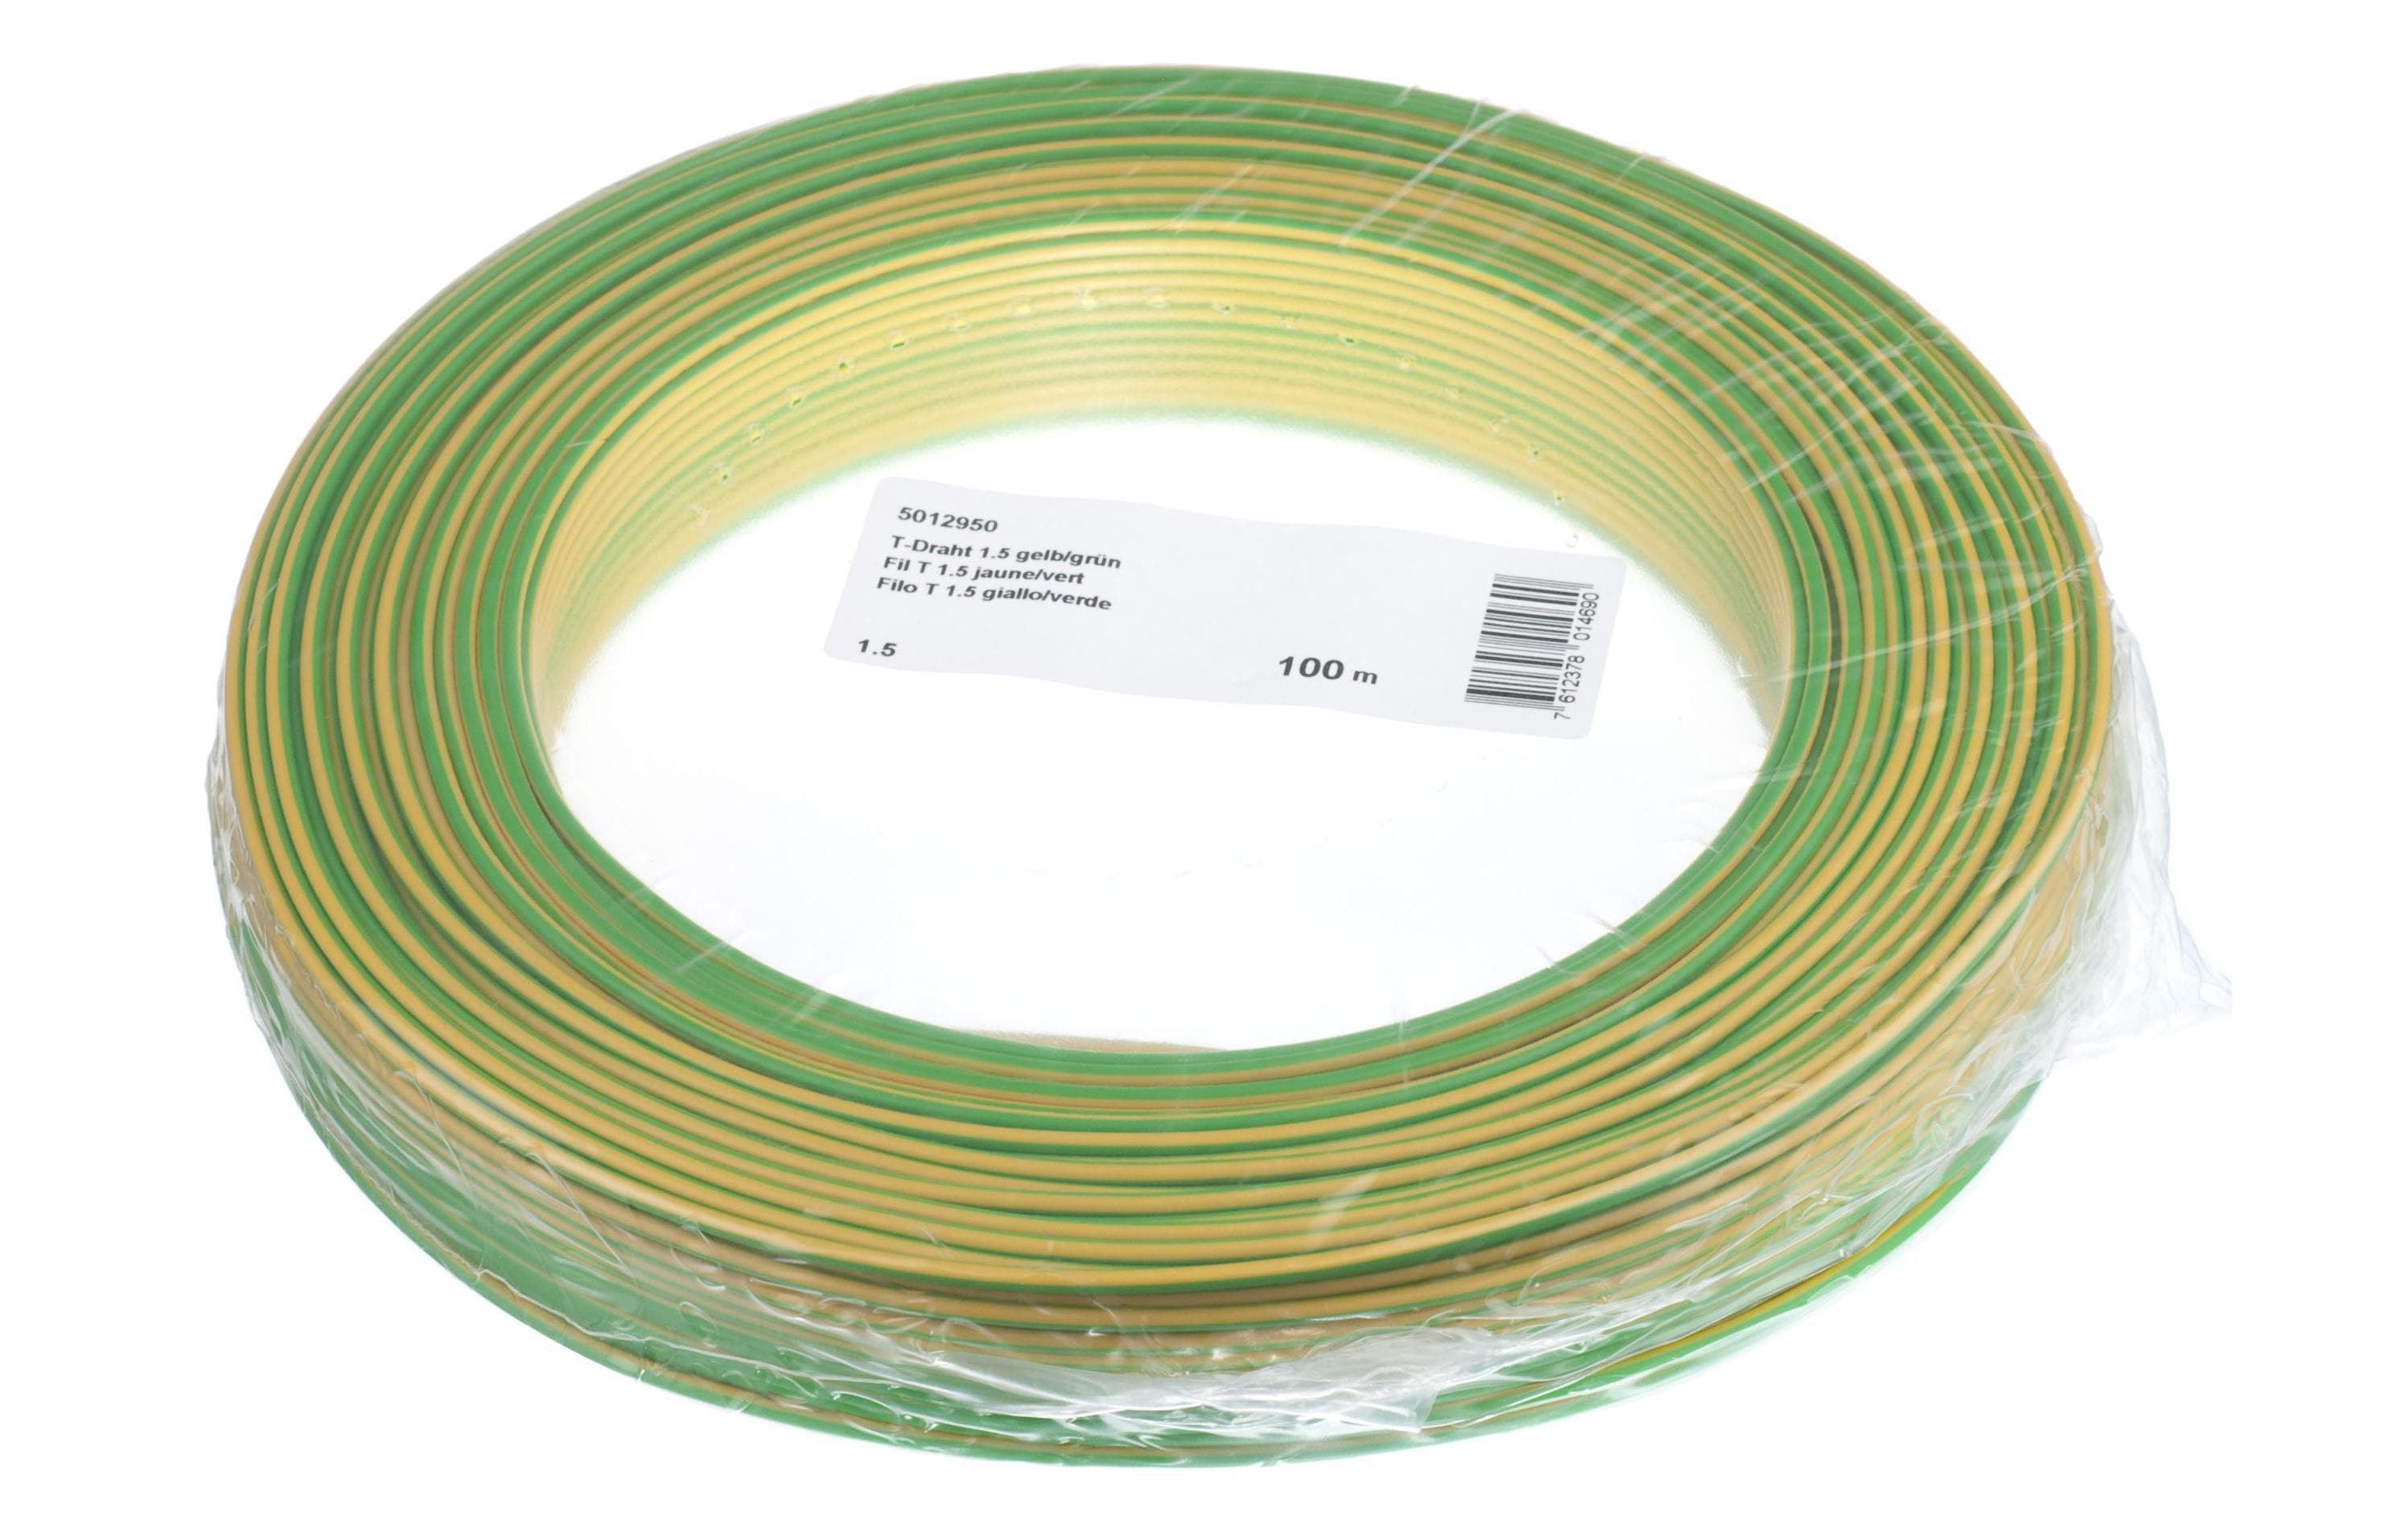 Nexans T-Draht 1.5 mm2 gelb/grün